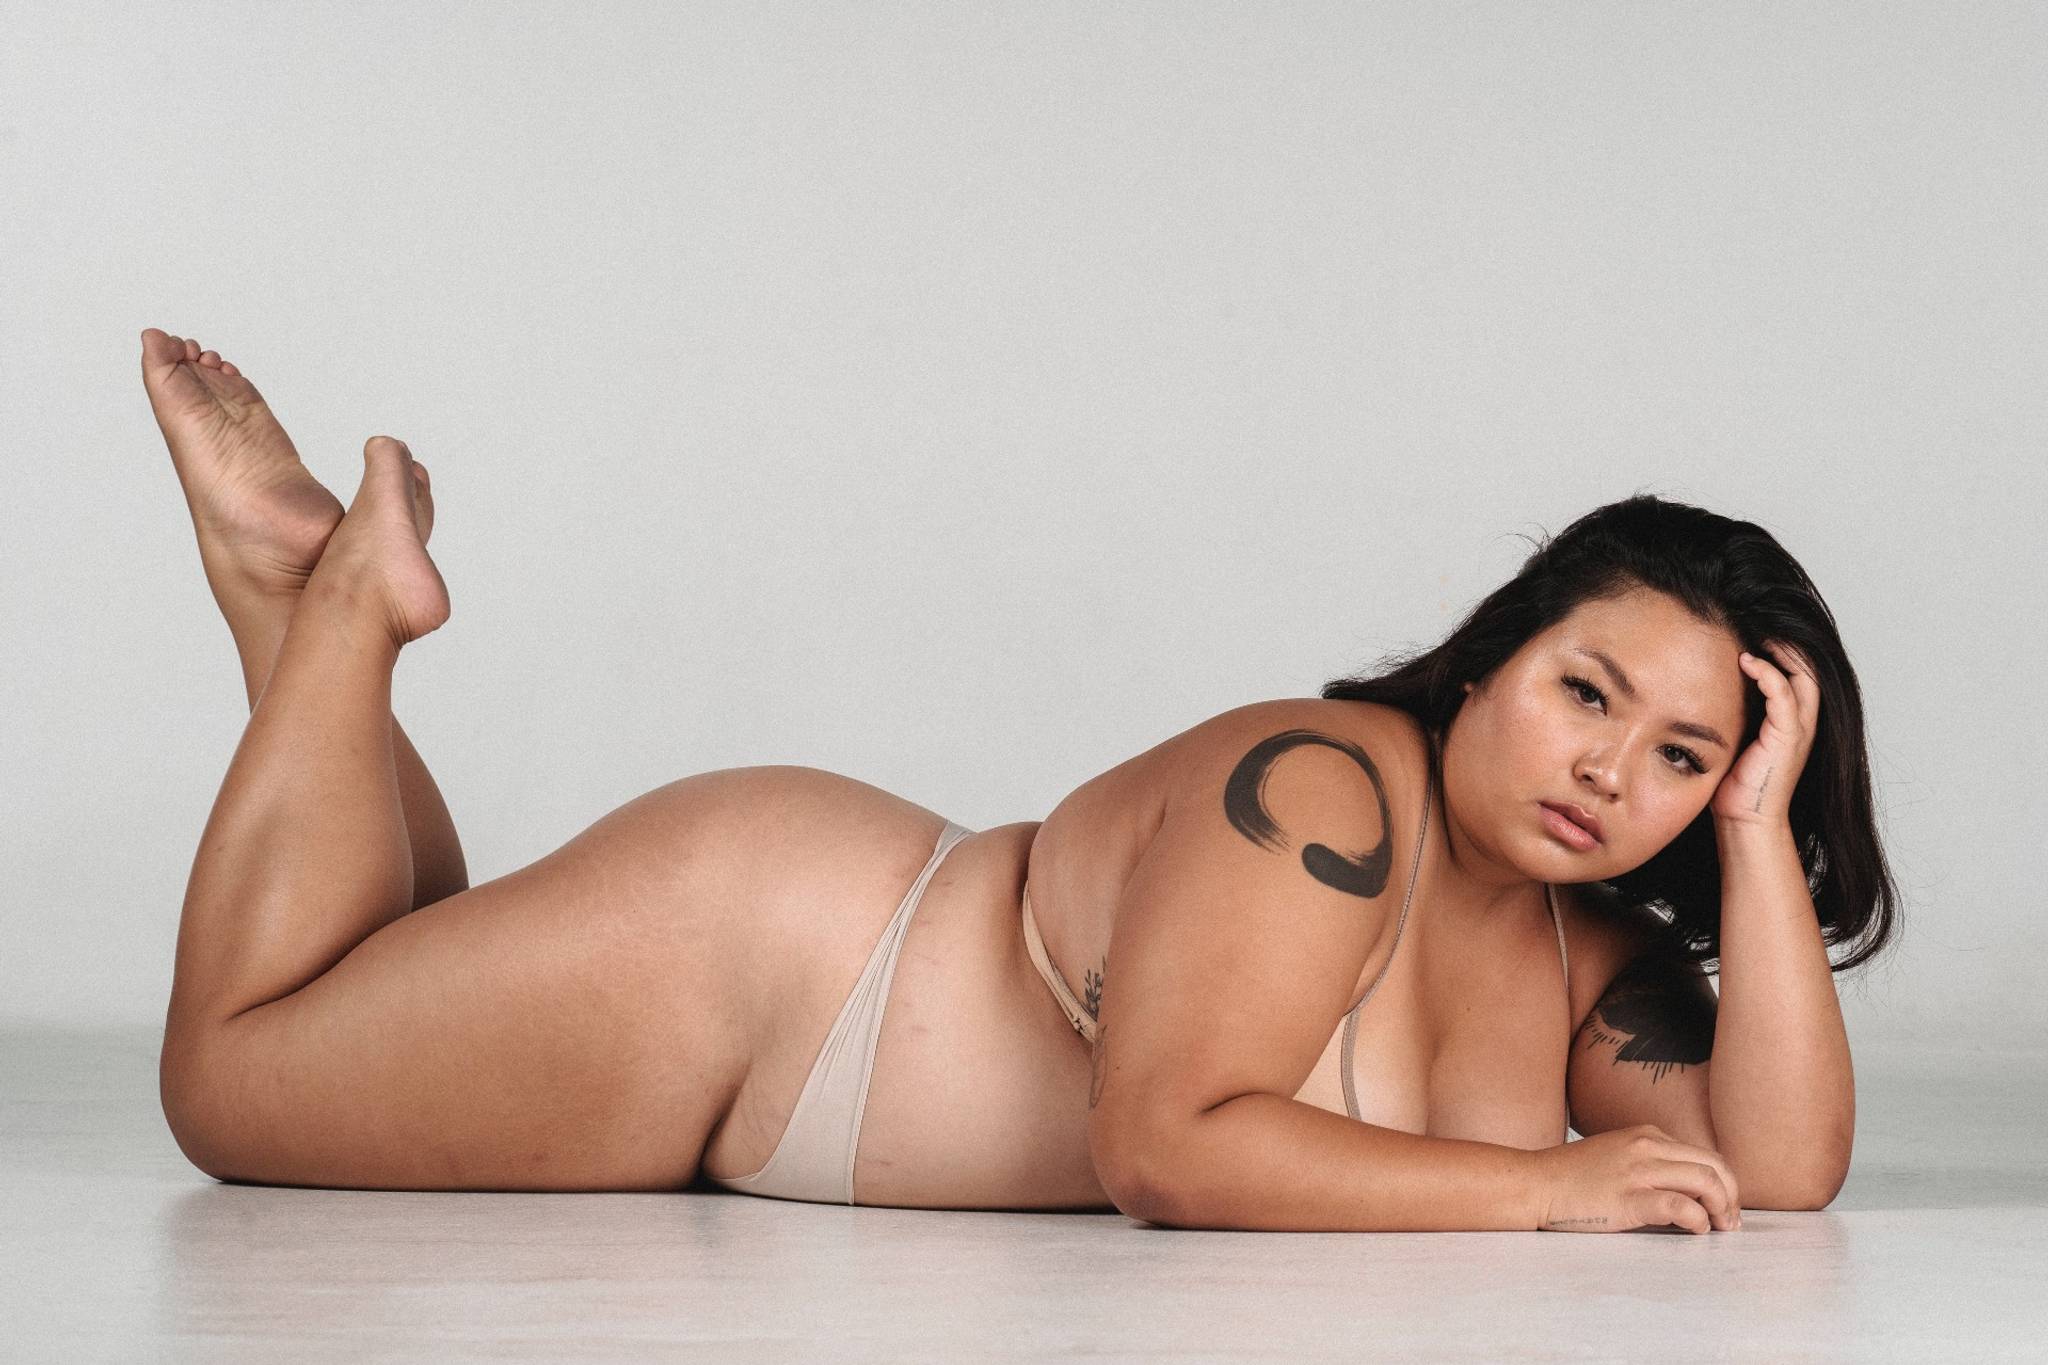 NeiWai lingerie campaign champions body diversity